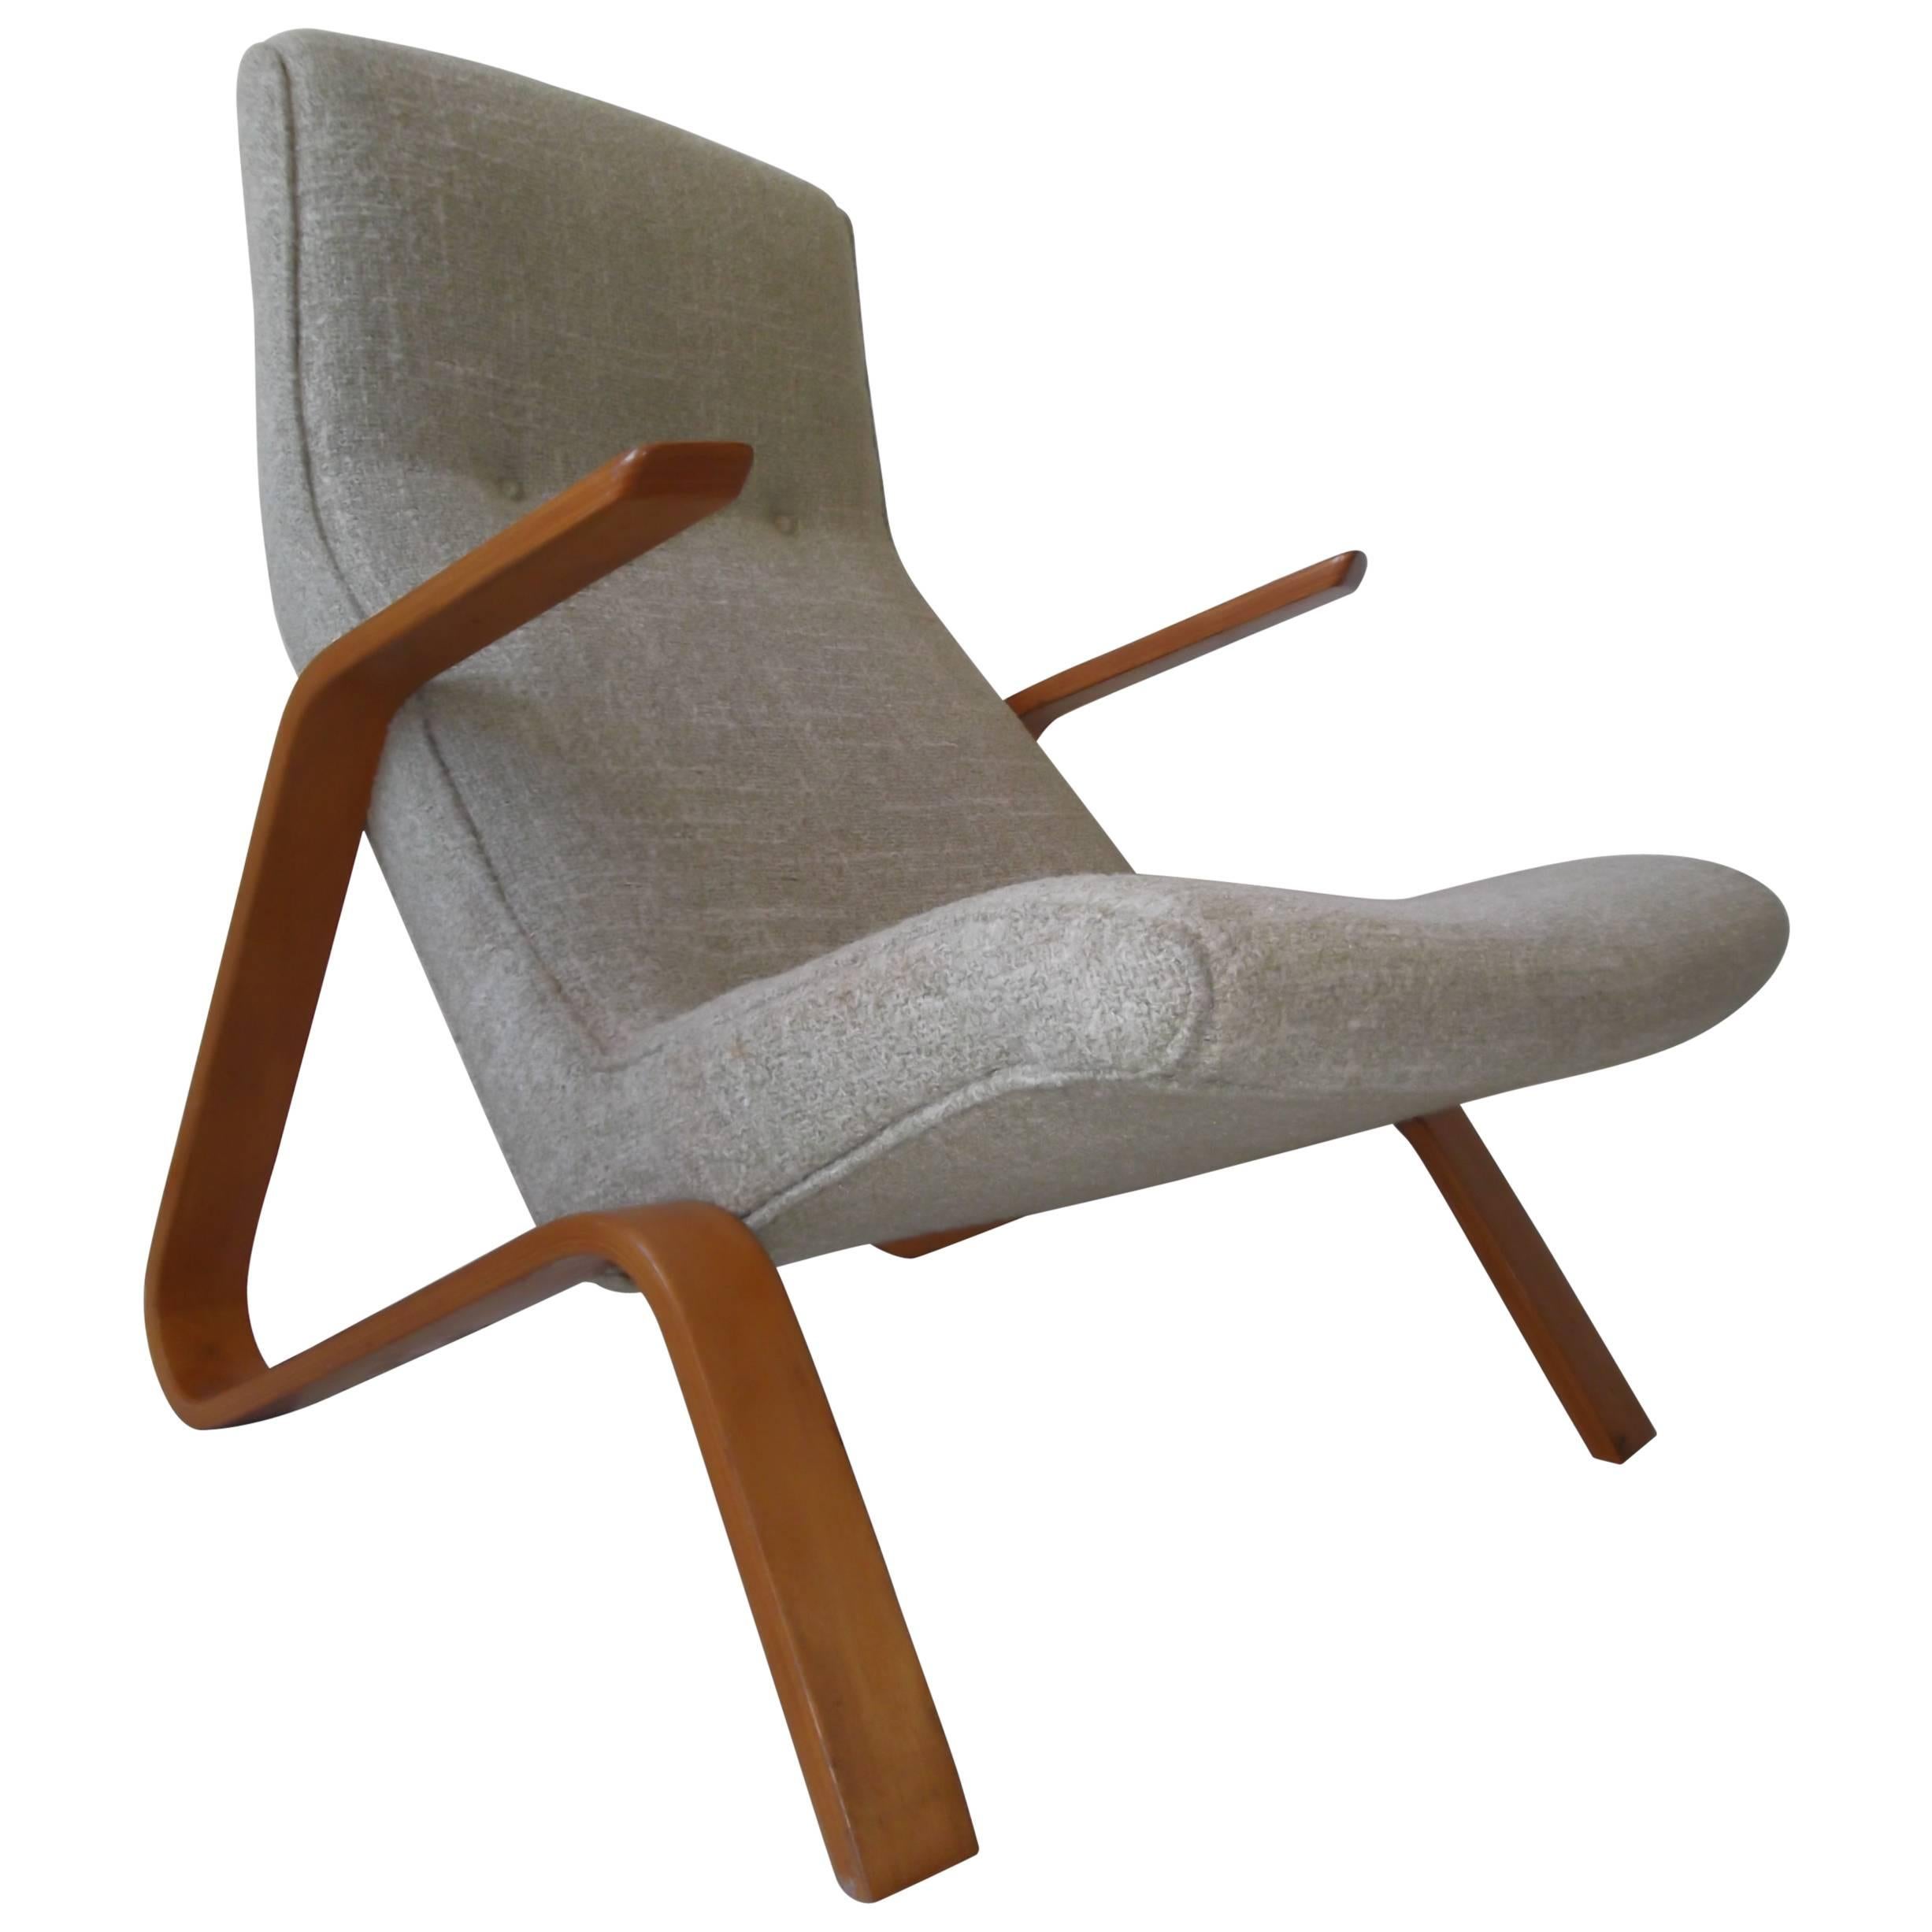 Original Eero Saarinen 1950 Knoll Bentwood Grasshopper Chair